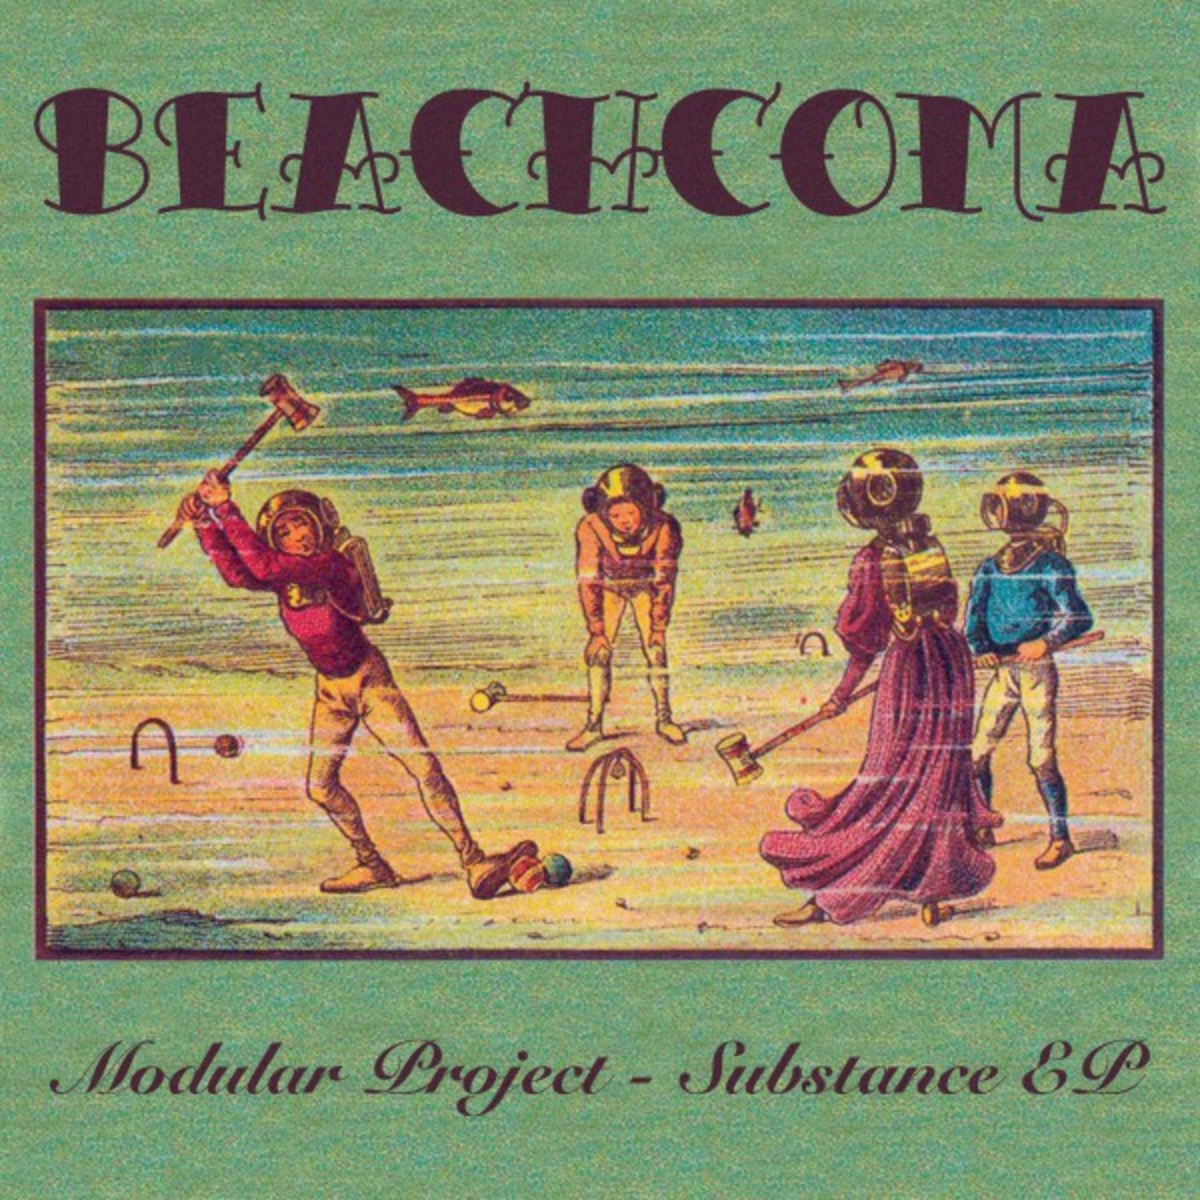 Modular Project - Substance EP / Beachcoma Recordings